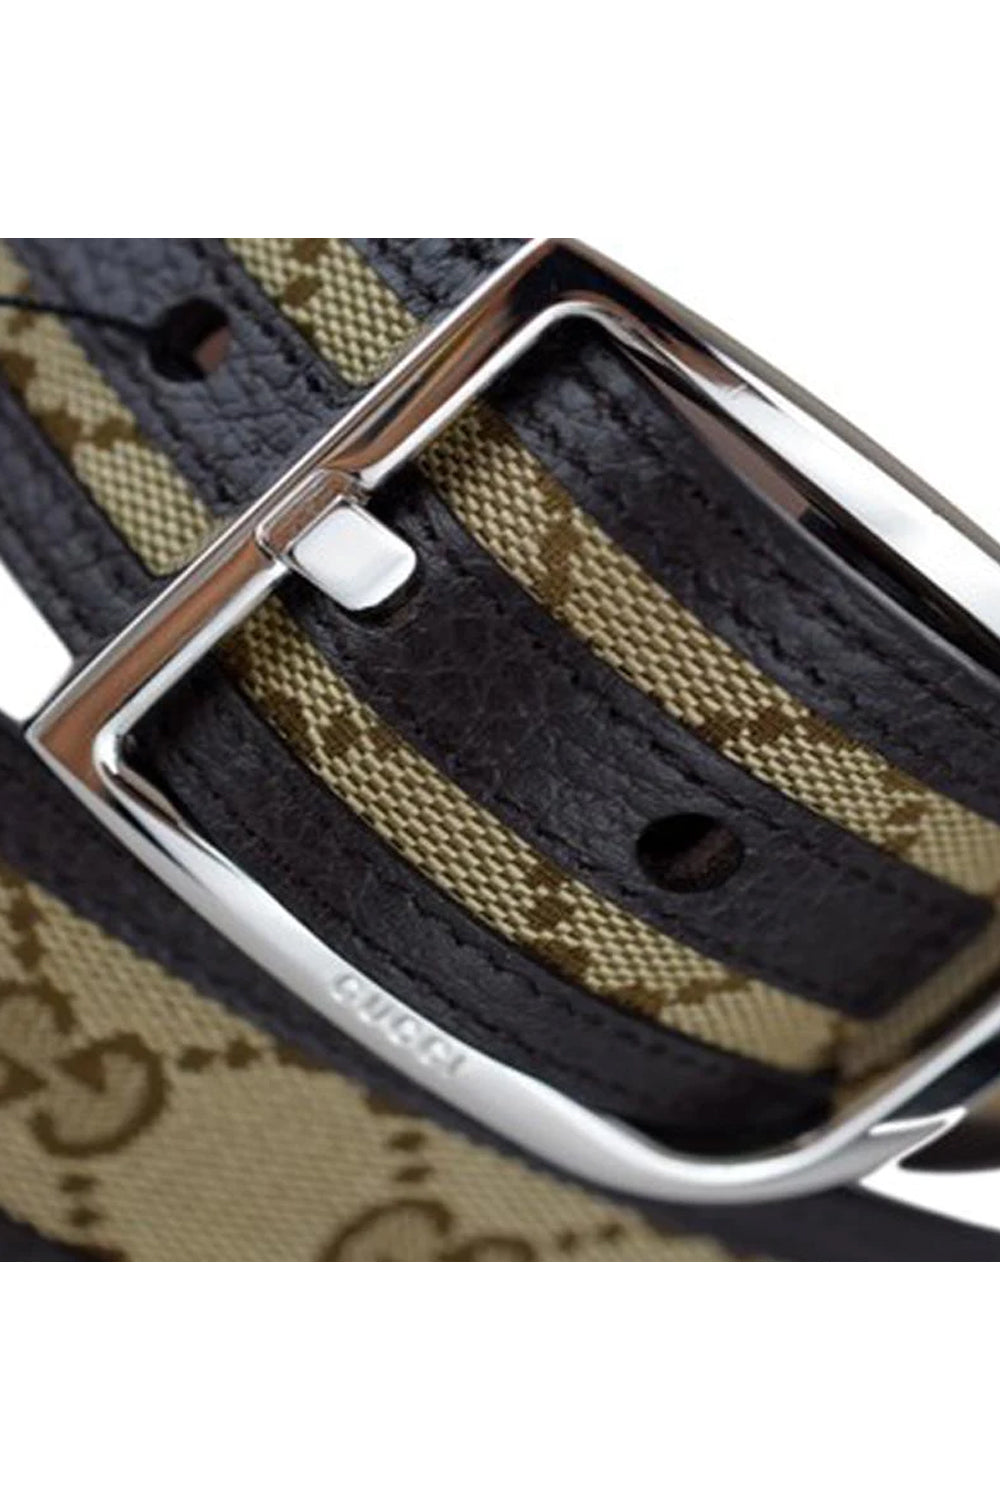 Gucci GG Logo Original Belt Canvas Leather Brown